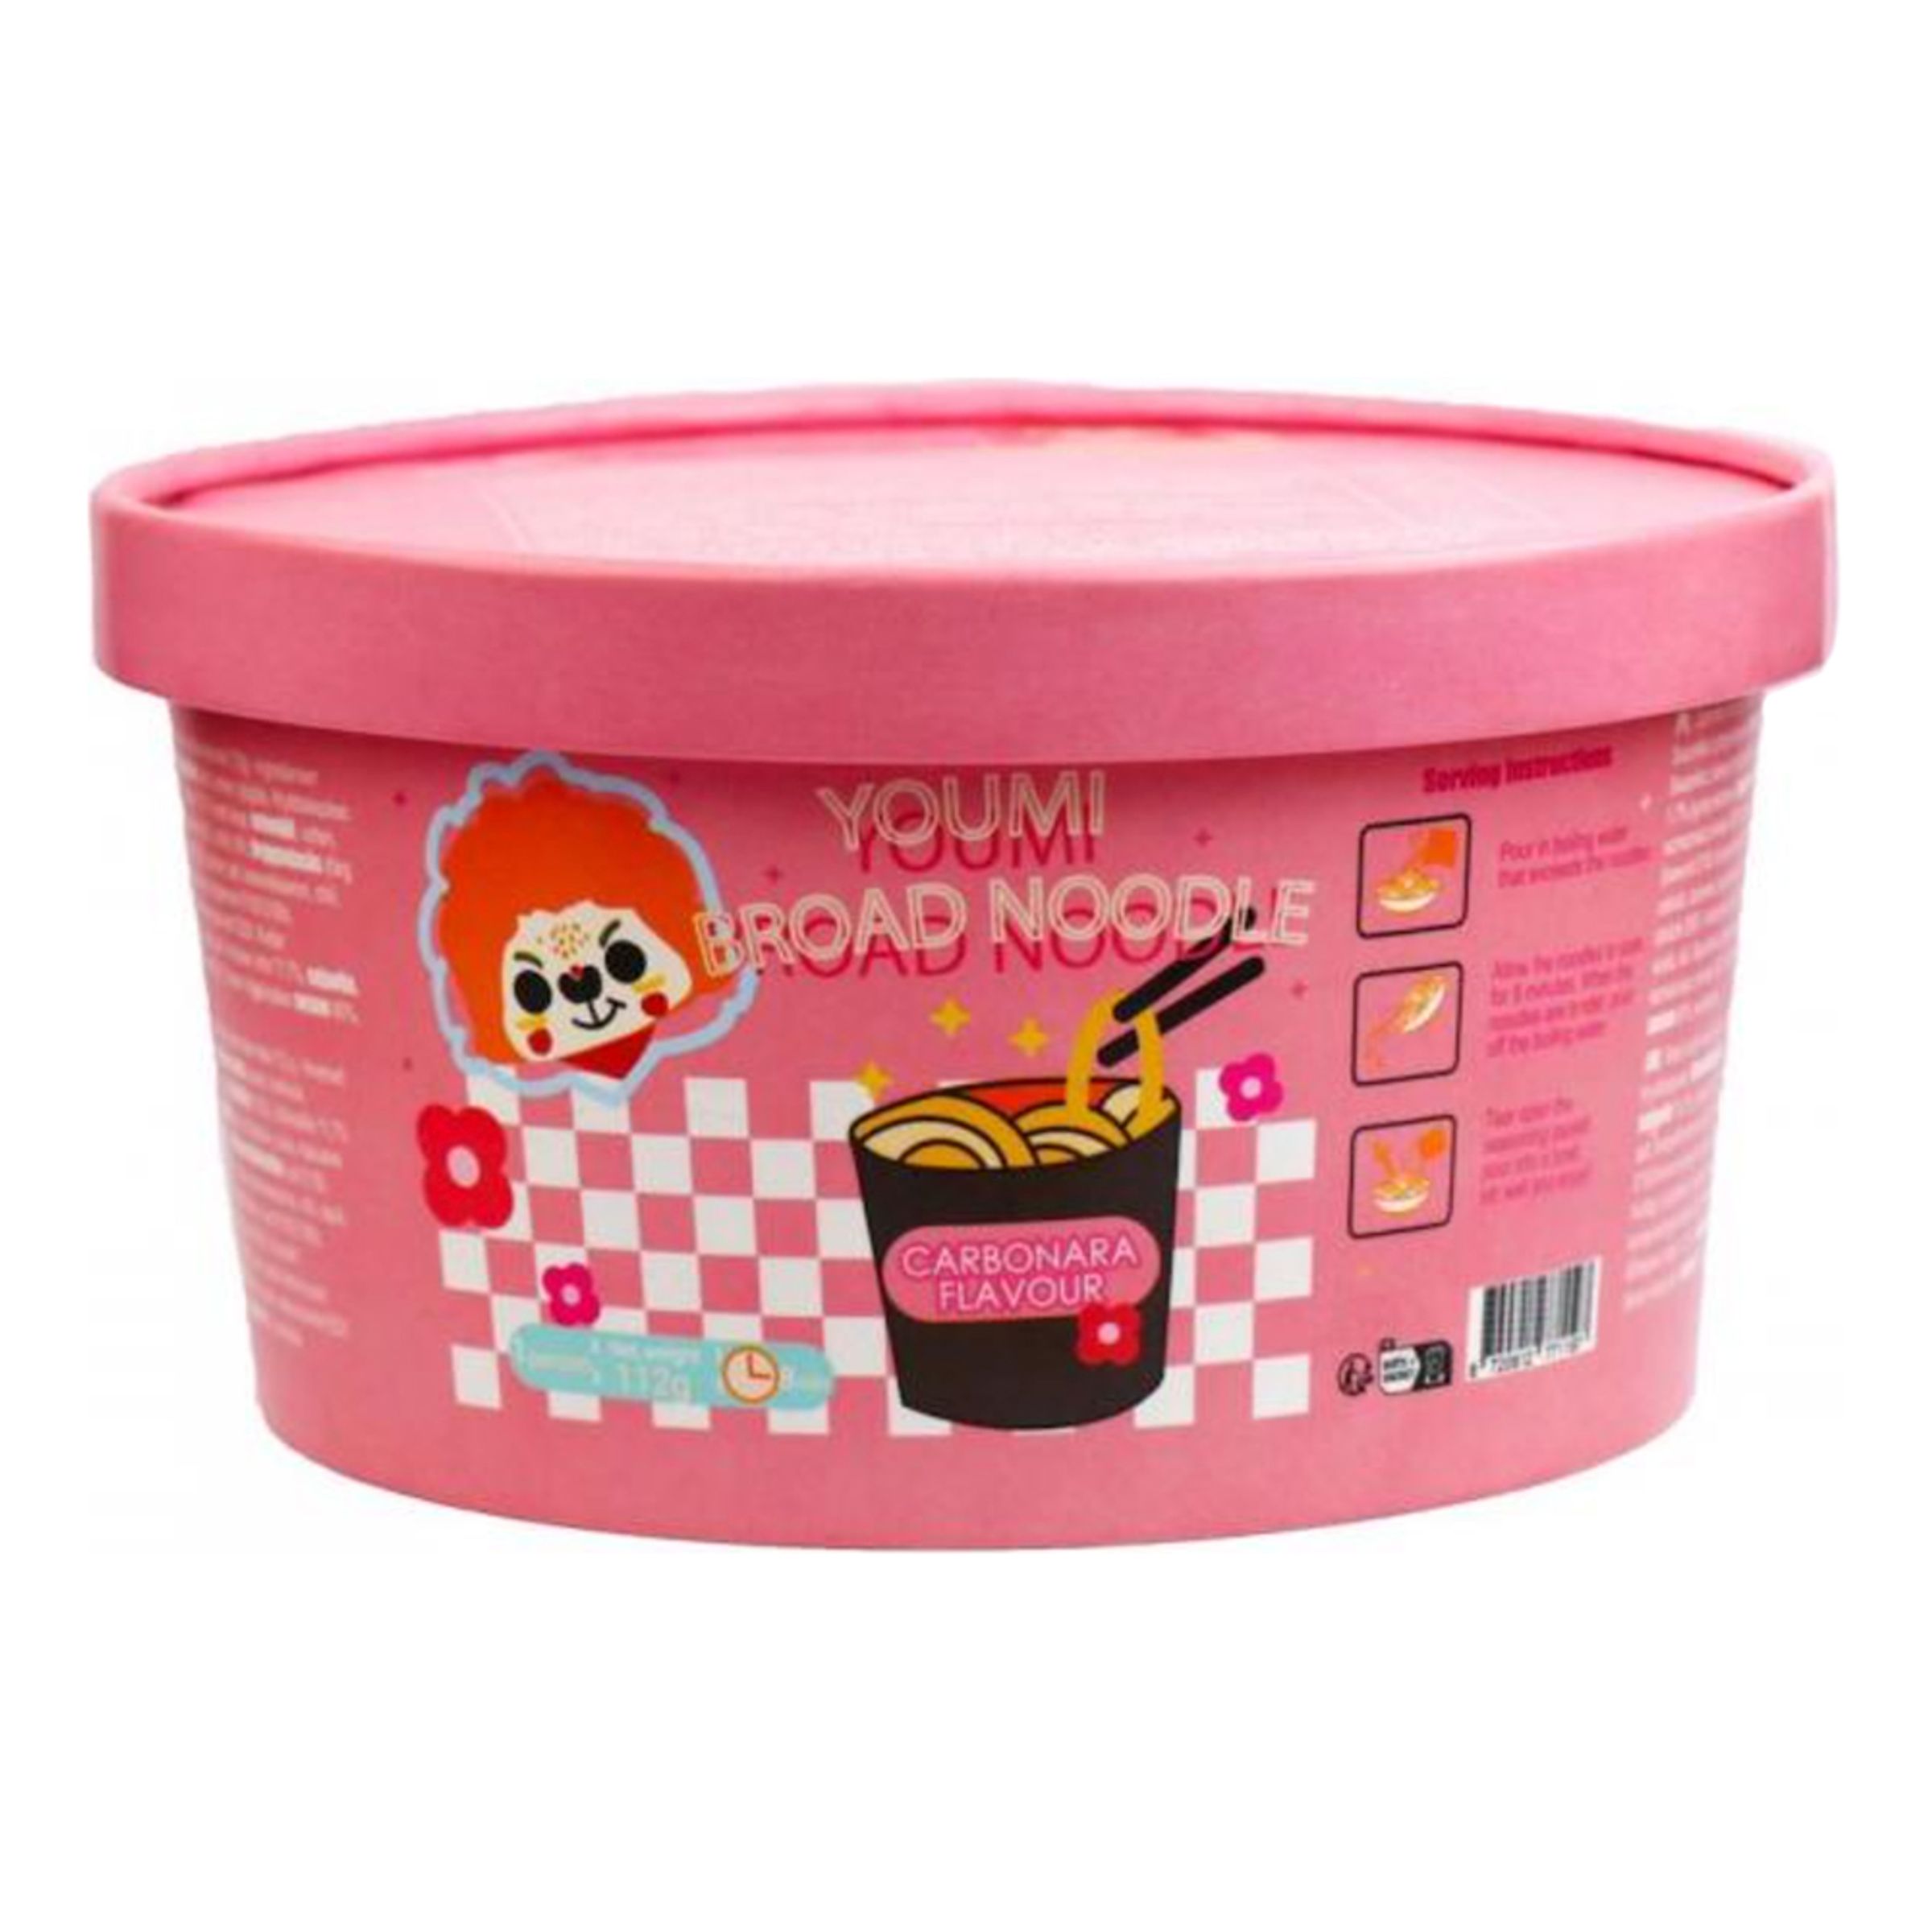 Läs mer om Youmi Instant Broad Noodle Carbonara Flavour - 112 gram